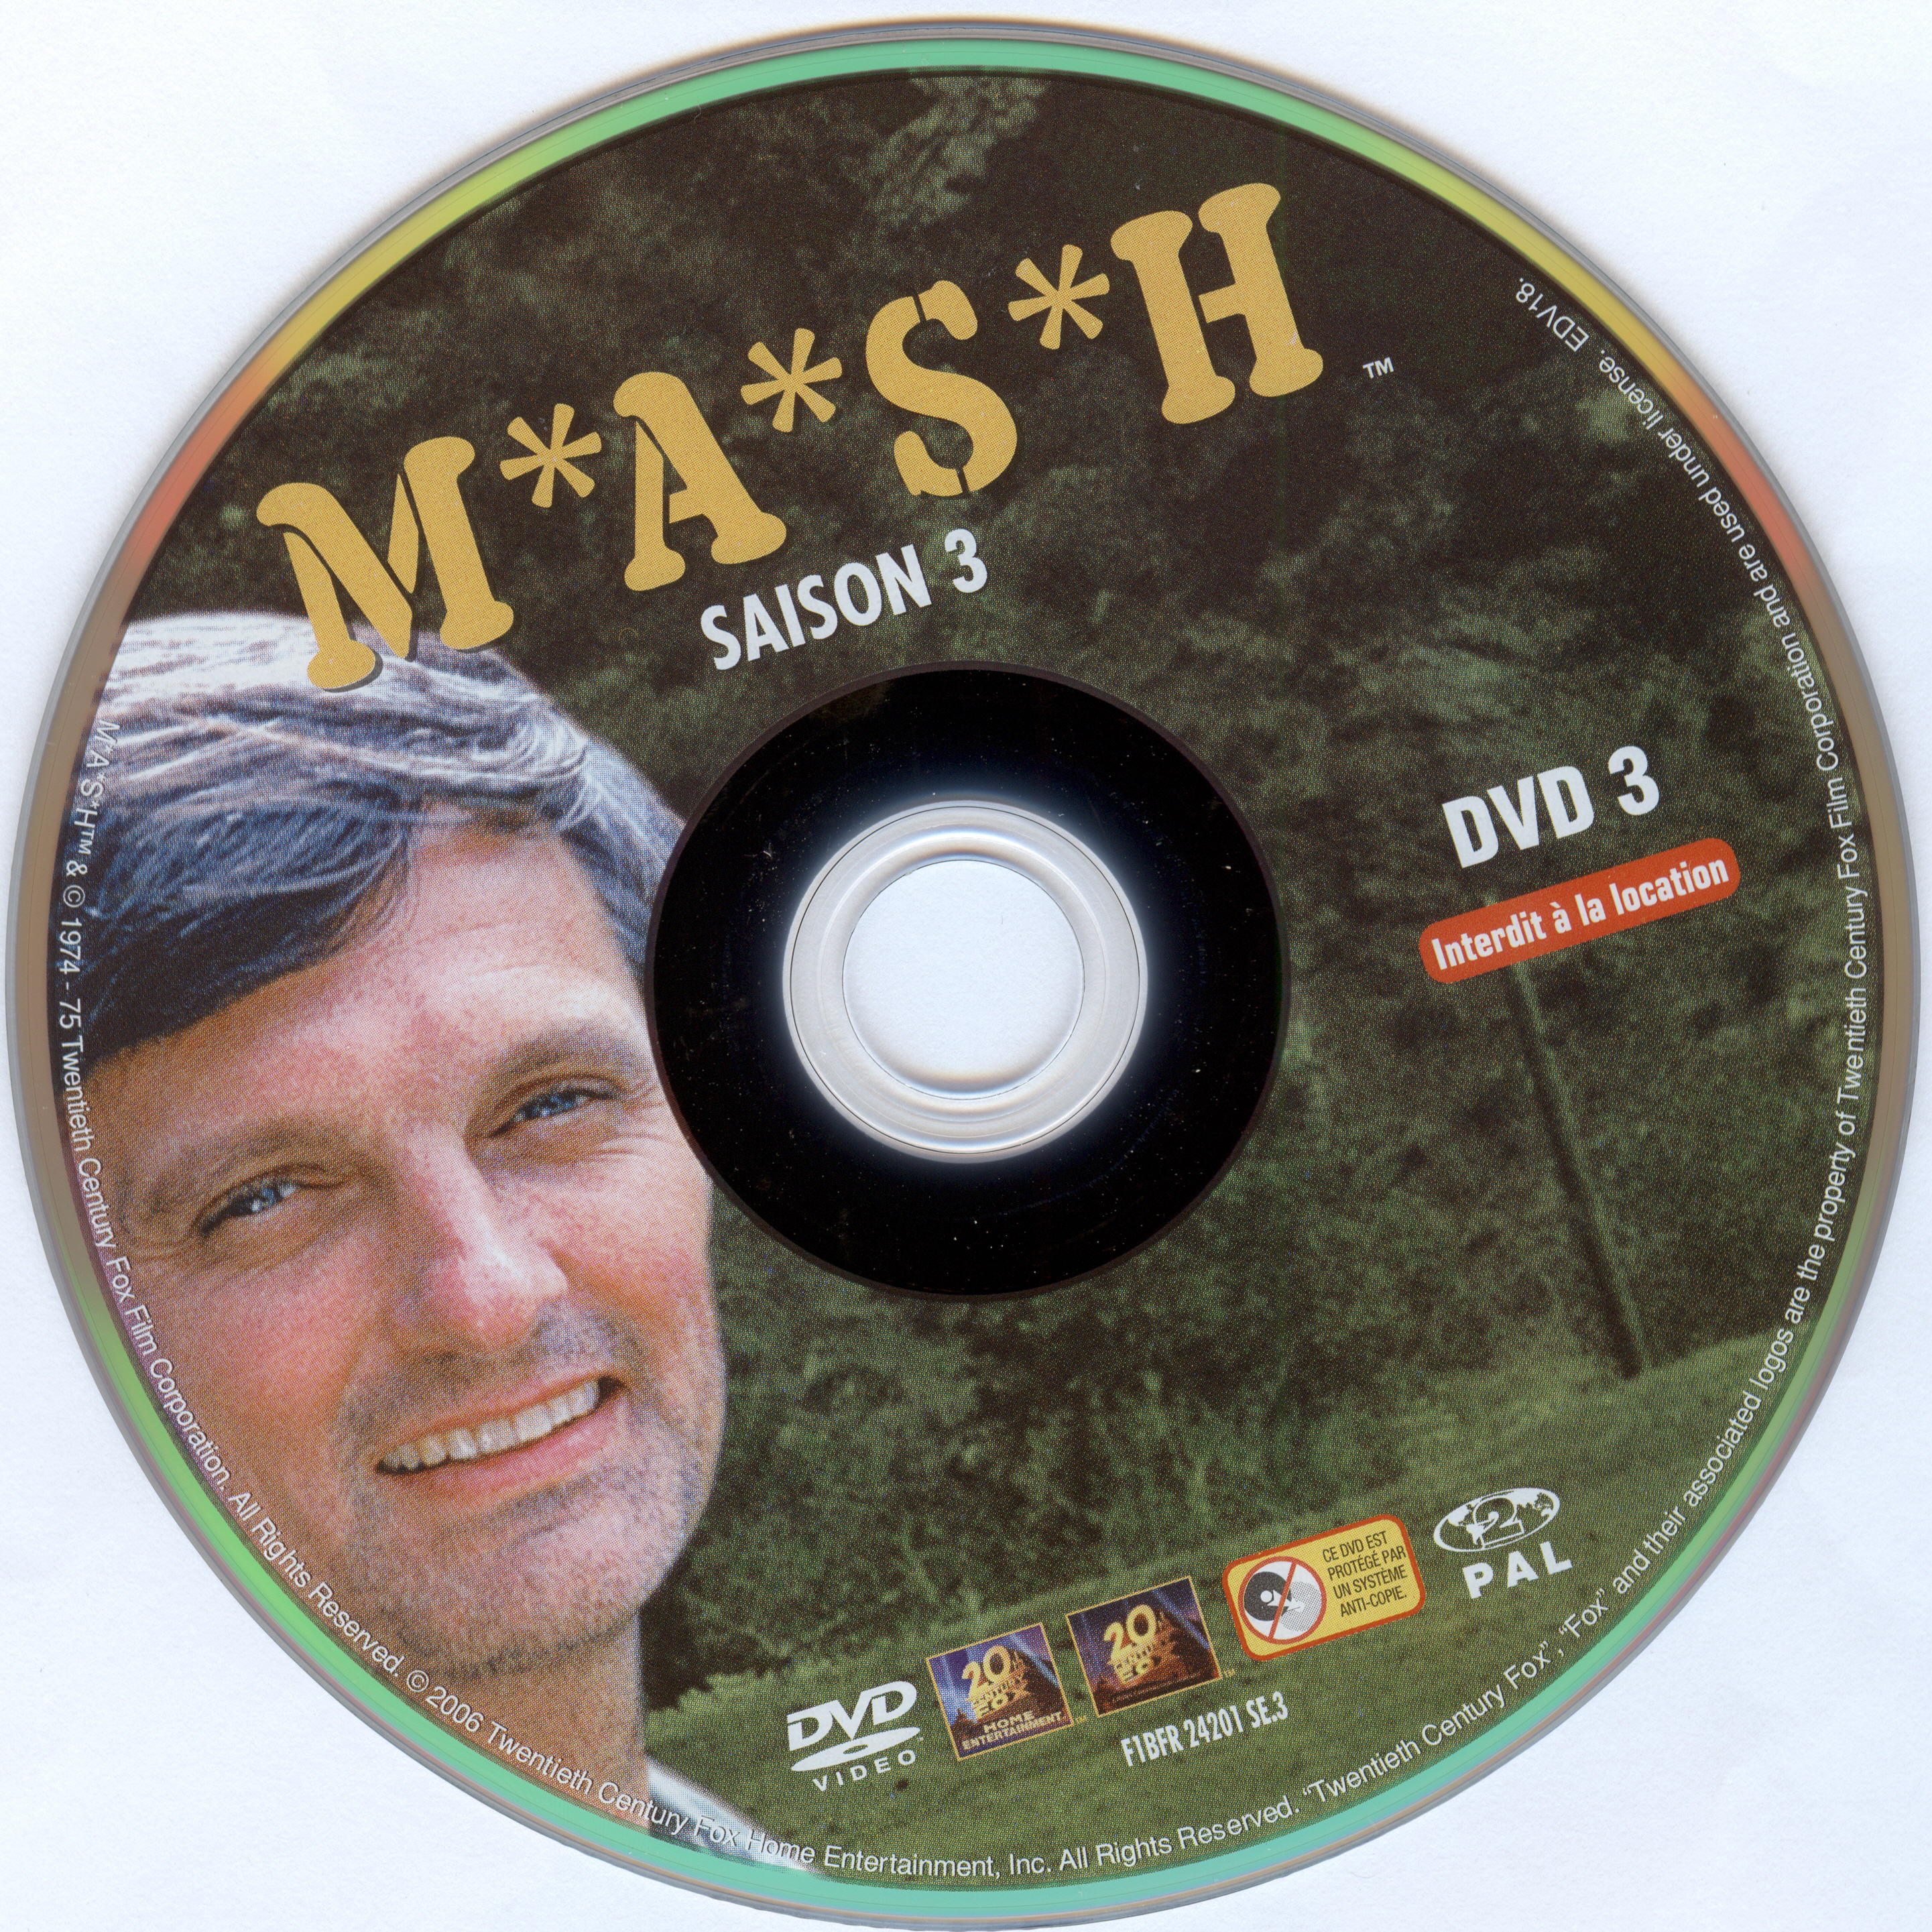 MASH Saison 3 DISC 3